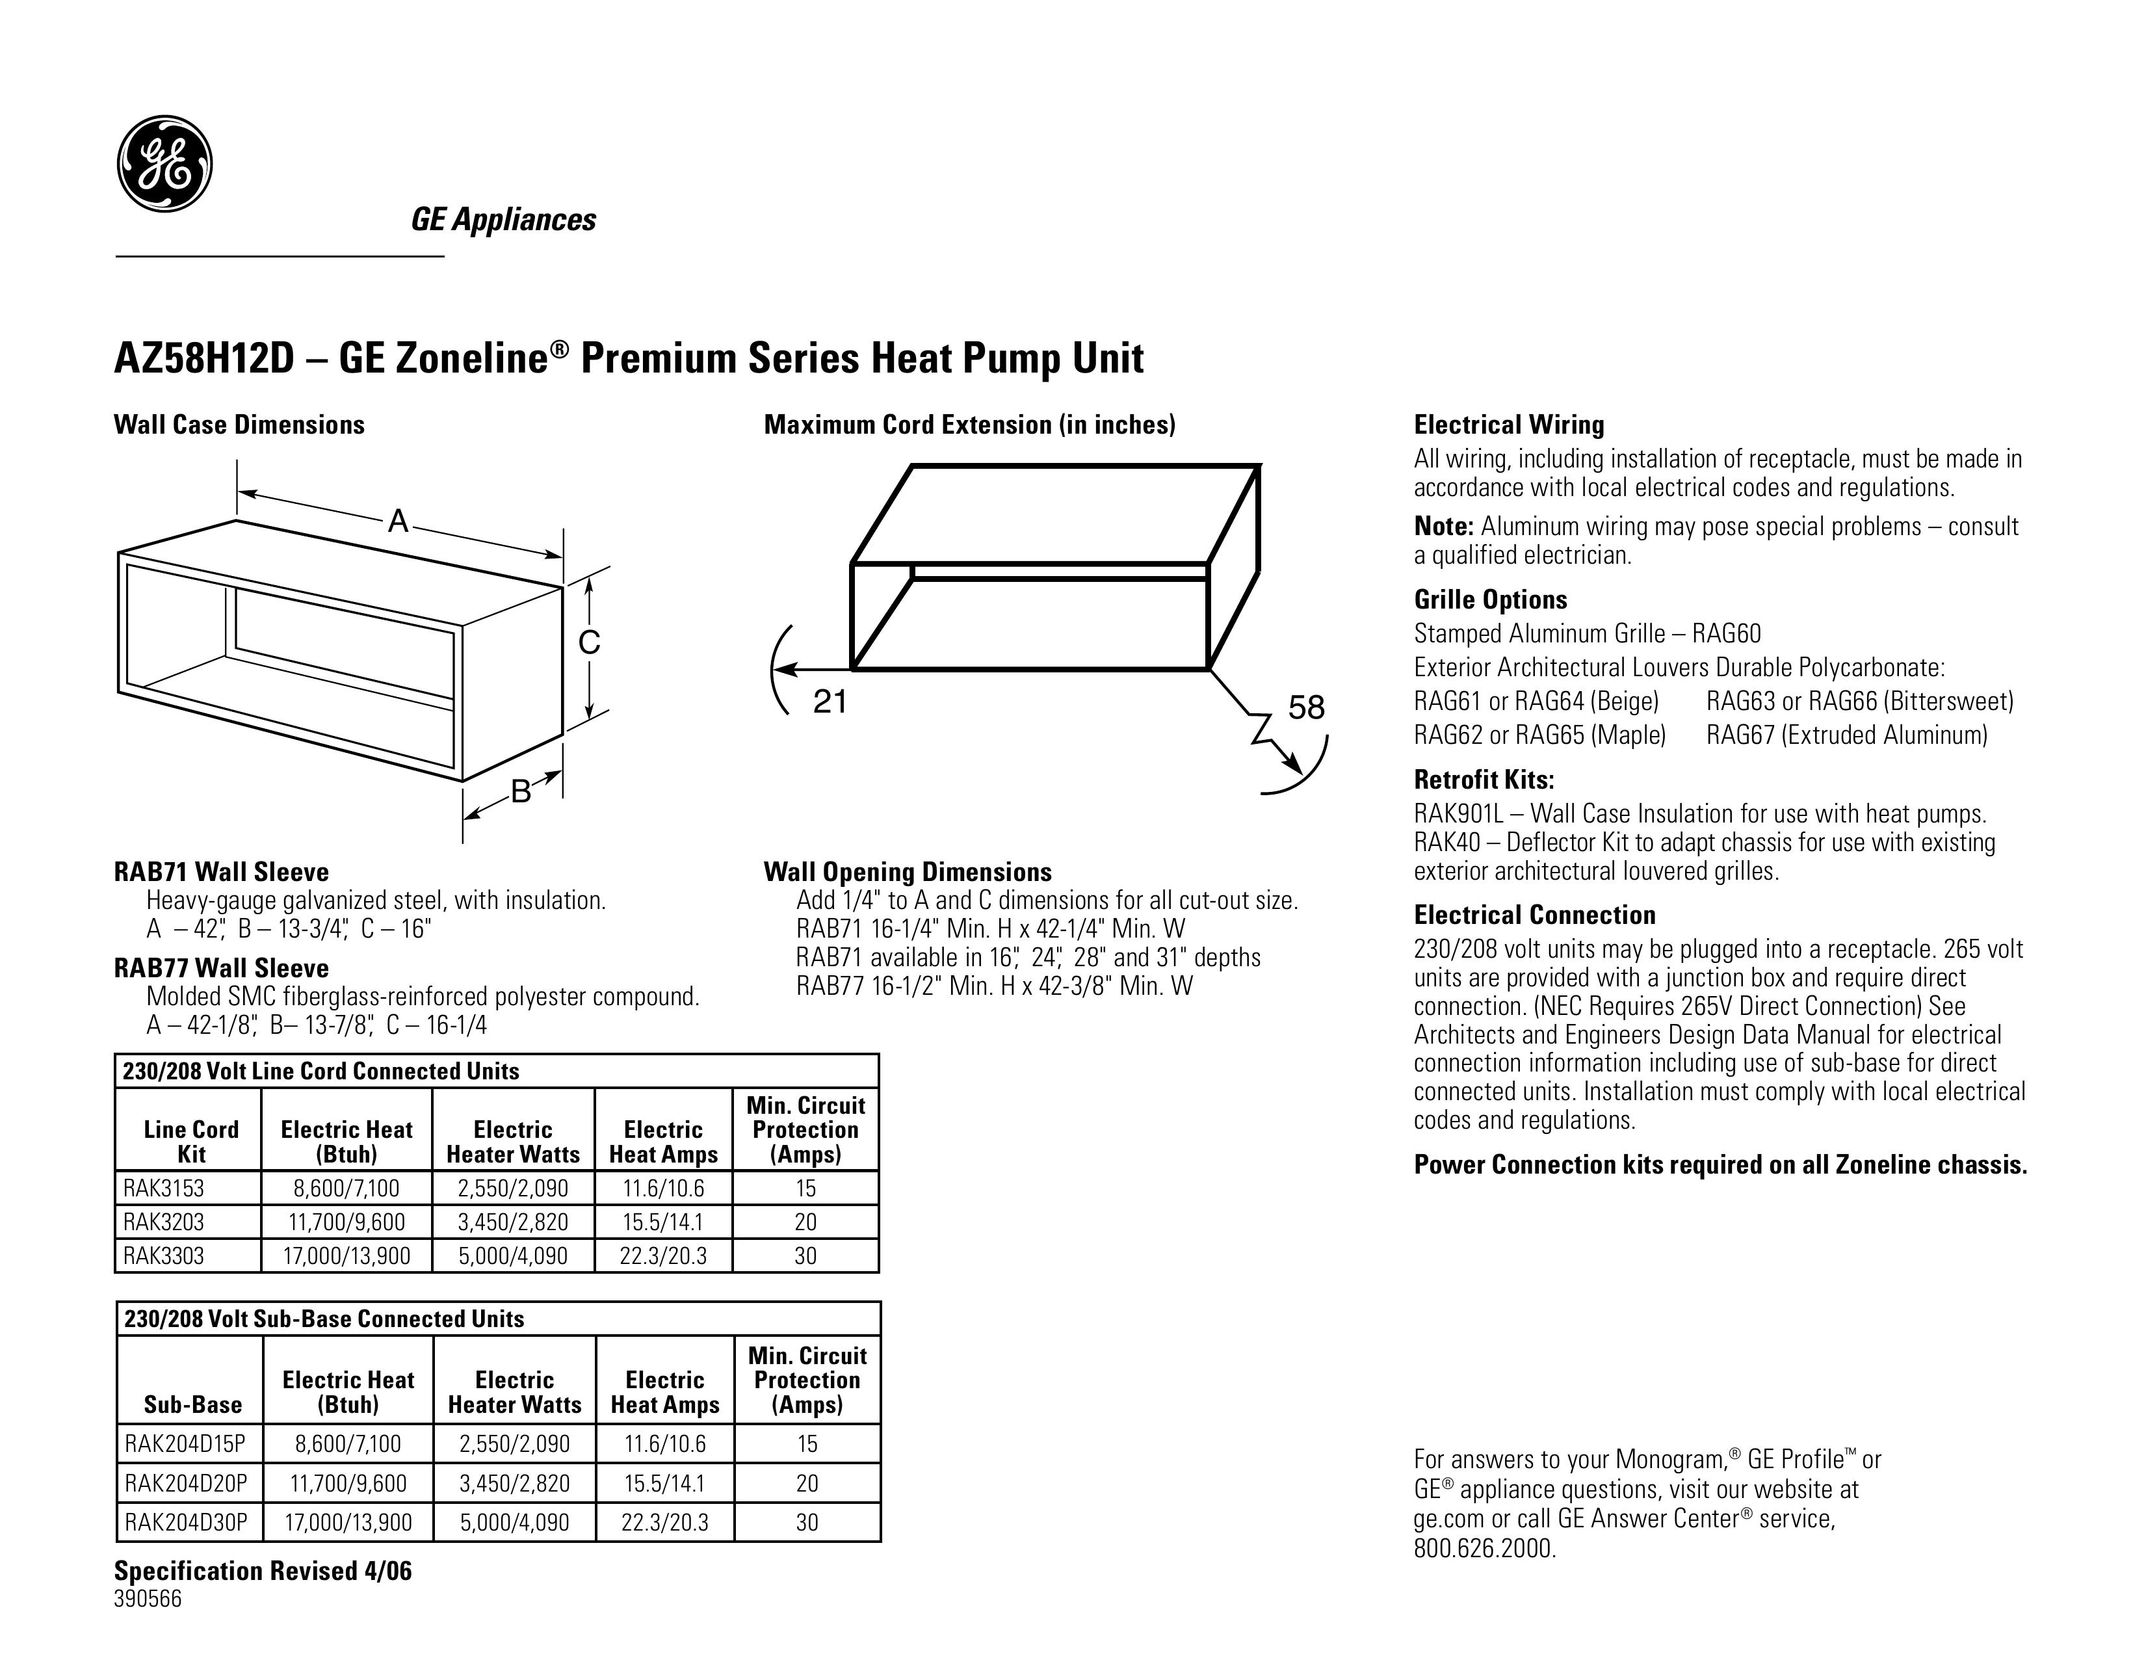 GE AZ58H12DAC Heat Pump User Manual